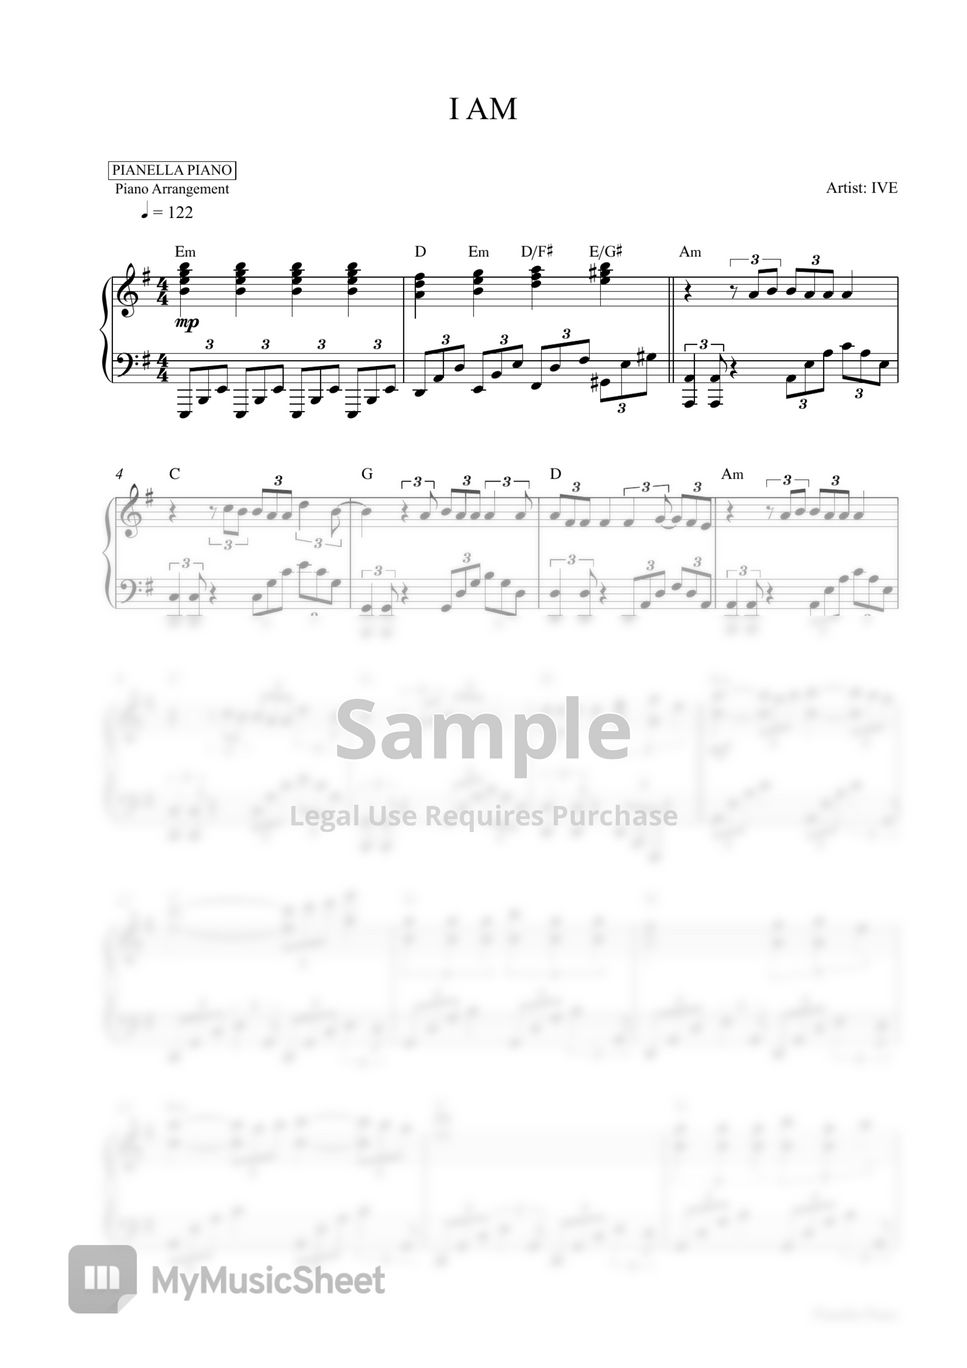 IVE - I AM (Piano Sheet) by Pianella Piano